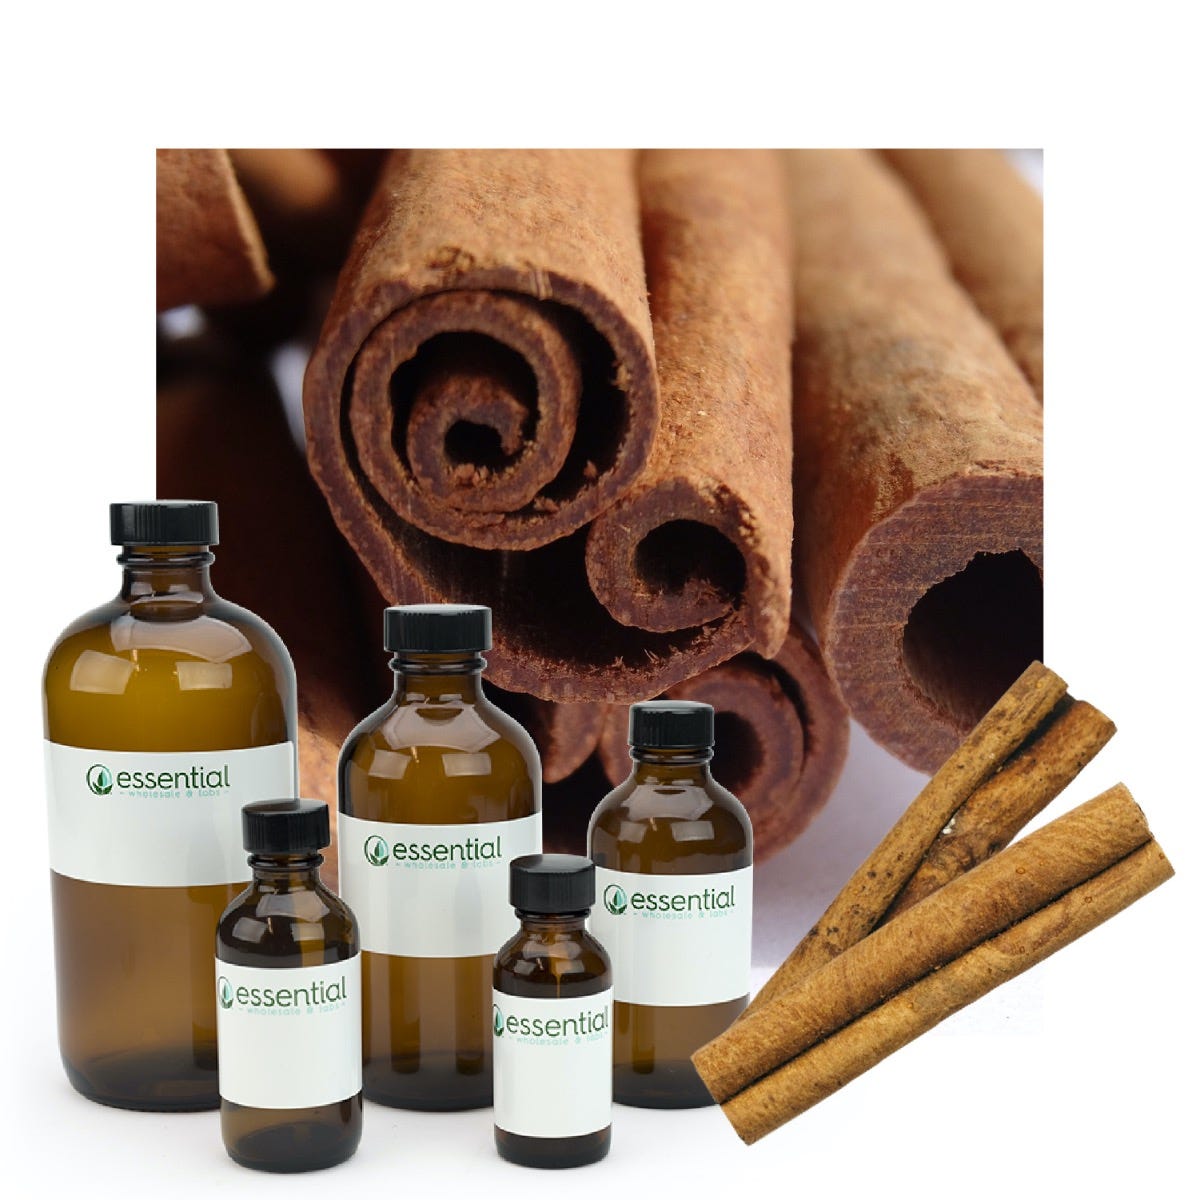 Cinnamon Bark Essential Oil - Buy Bulk